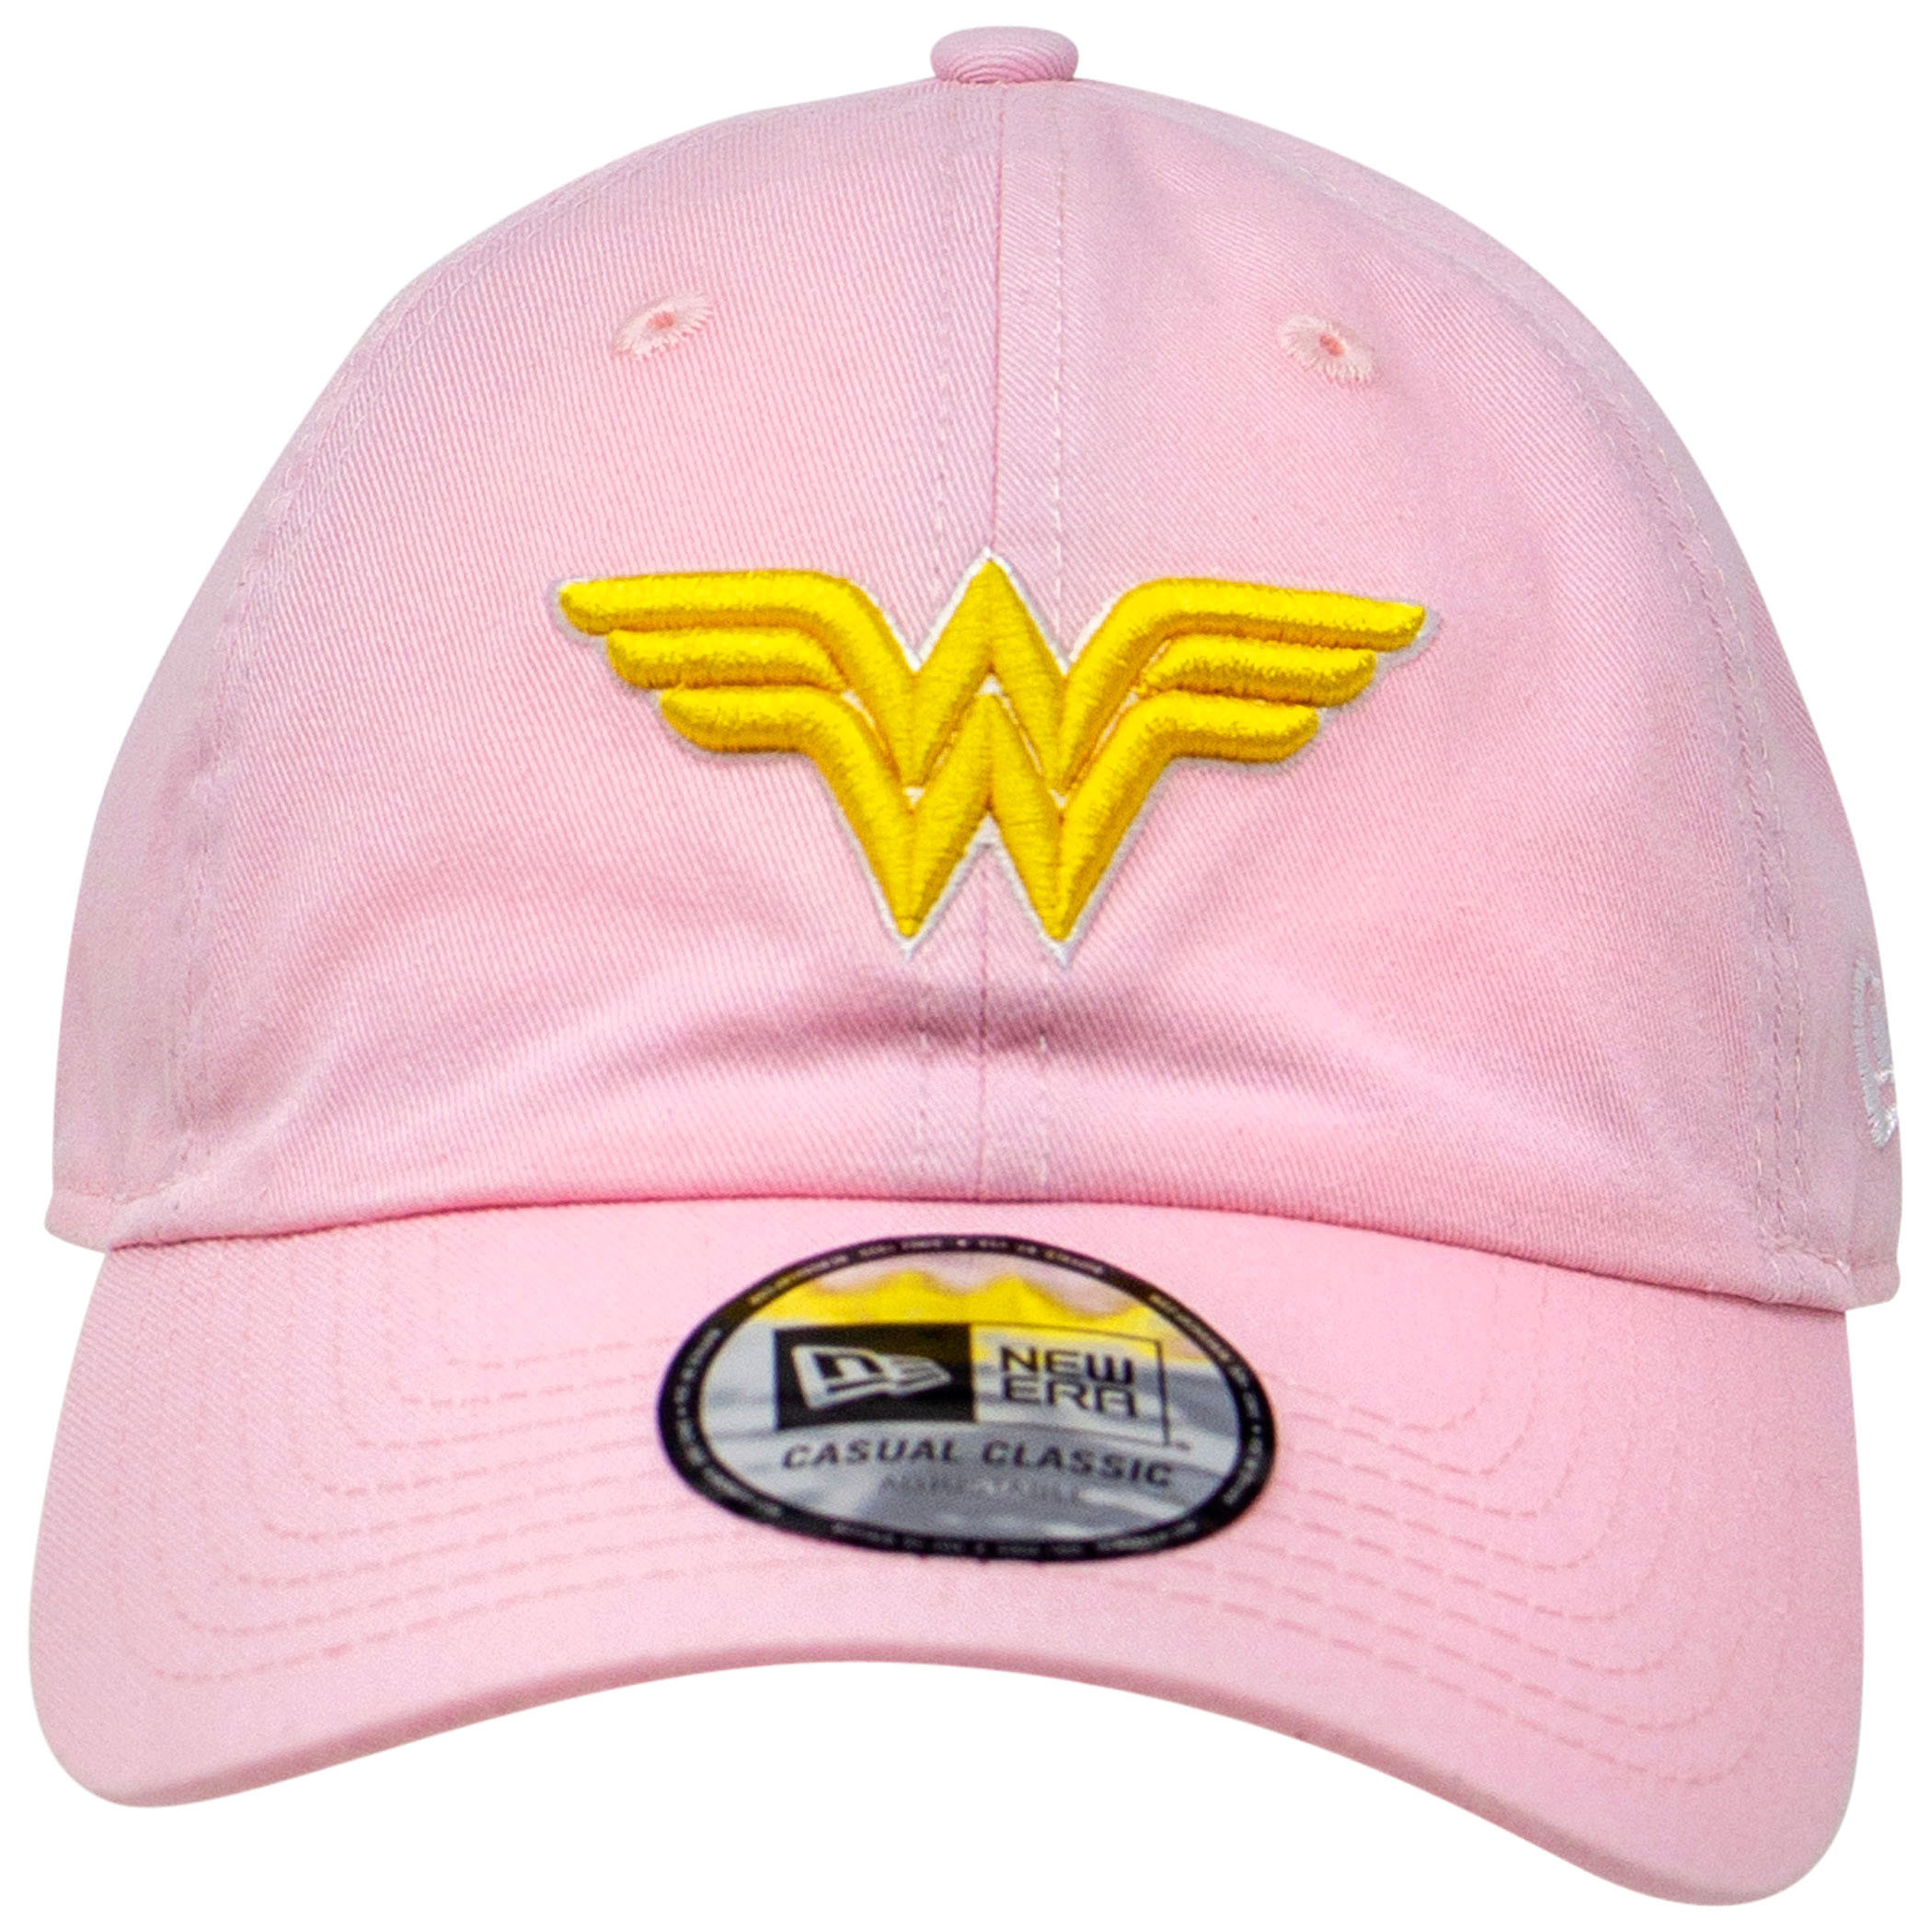 Wonder Woman Symbol New Era Casual Classic Adjustable Hat